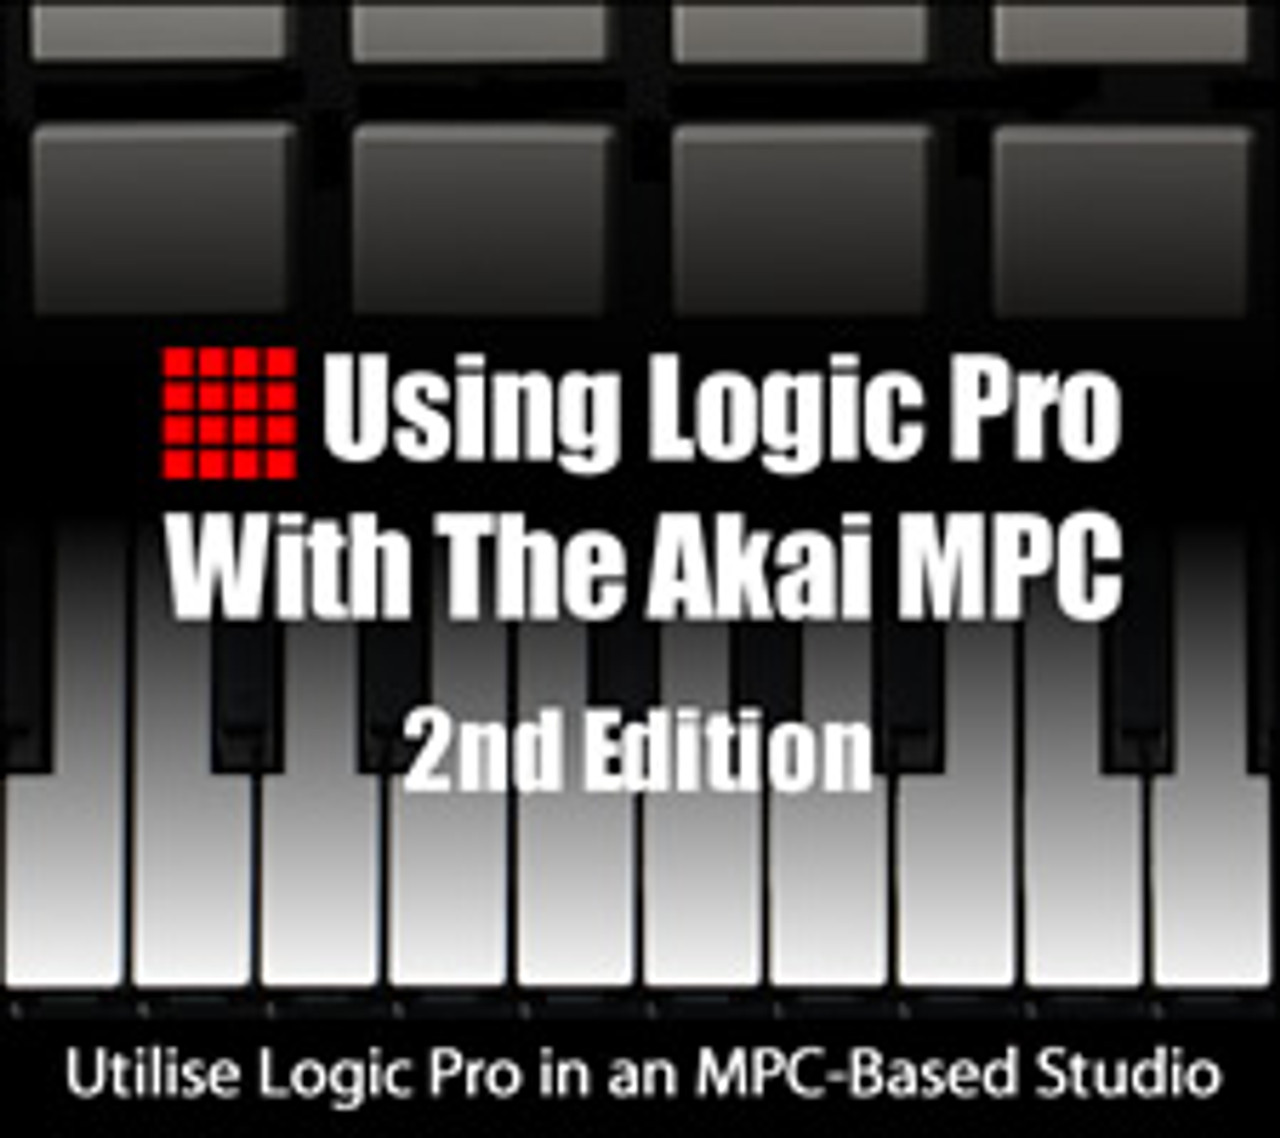 Using Logic Pro With The Akai MPC